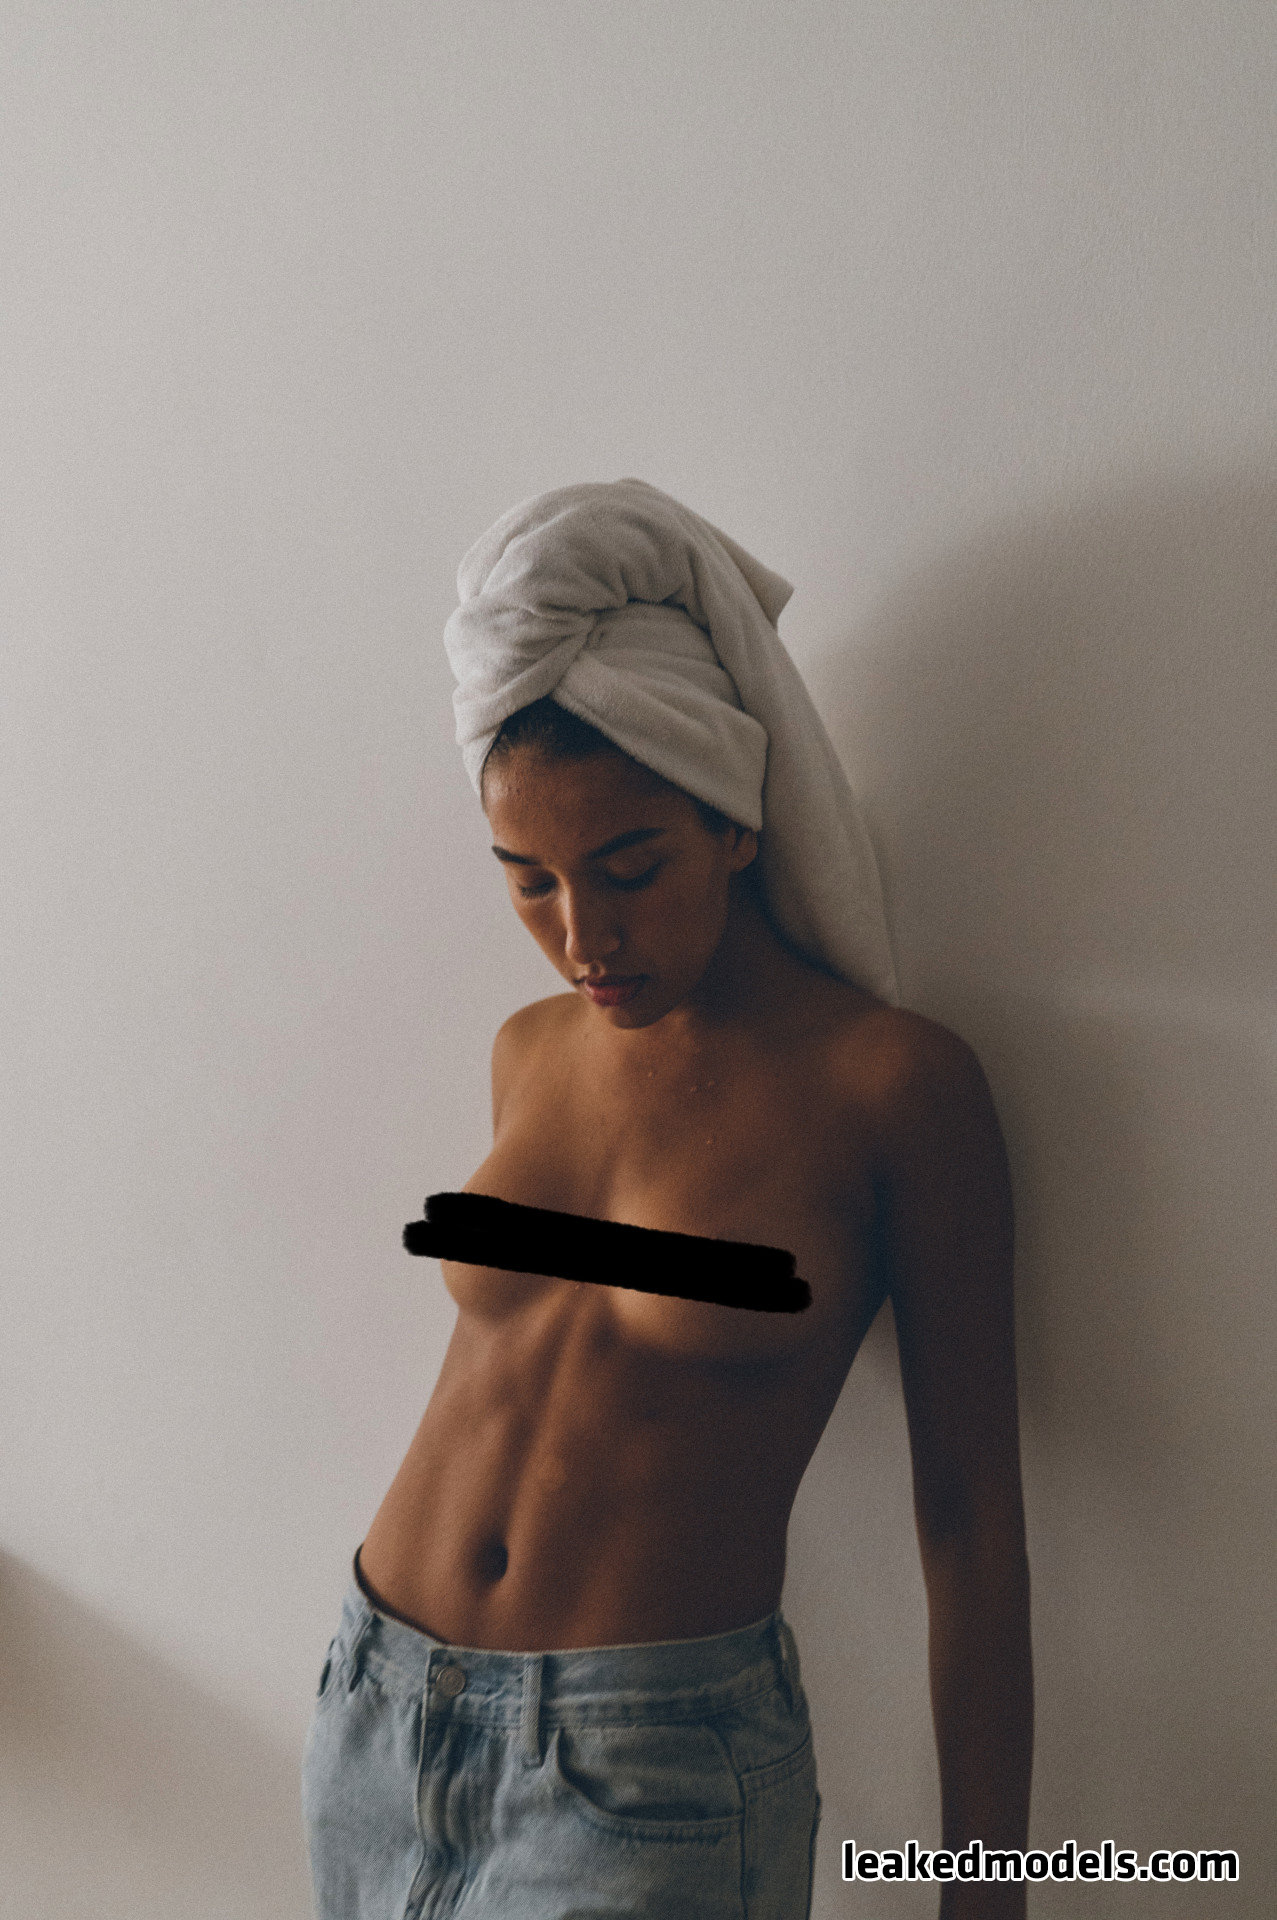 noa rgamani leaked nude leakedmodels.com 0009 - noa rgamani Instagram Sexy Leaks (27 Photos)